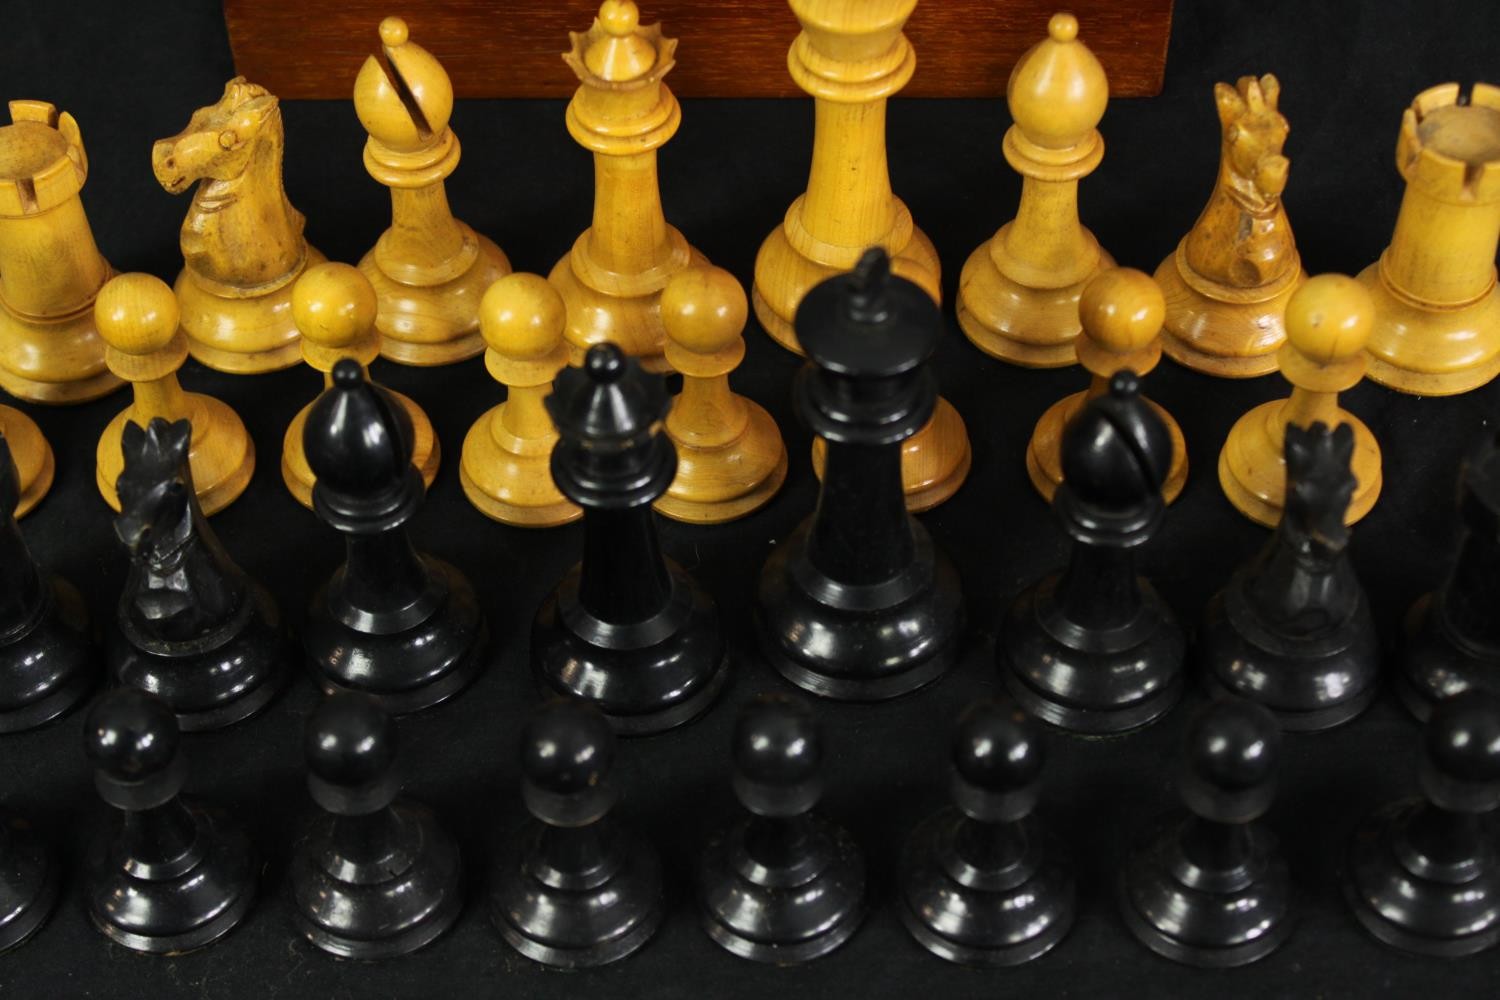 A C.1900 Staunton chess set, boxwood and ebony, boxed. H.10 W.21 D.16cm. (box). - Image 3 of 7